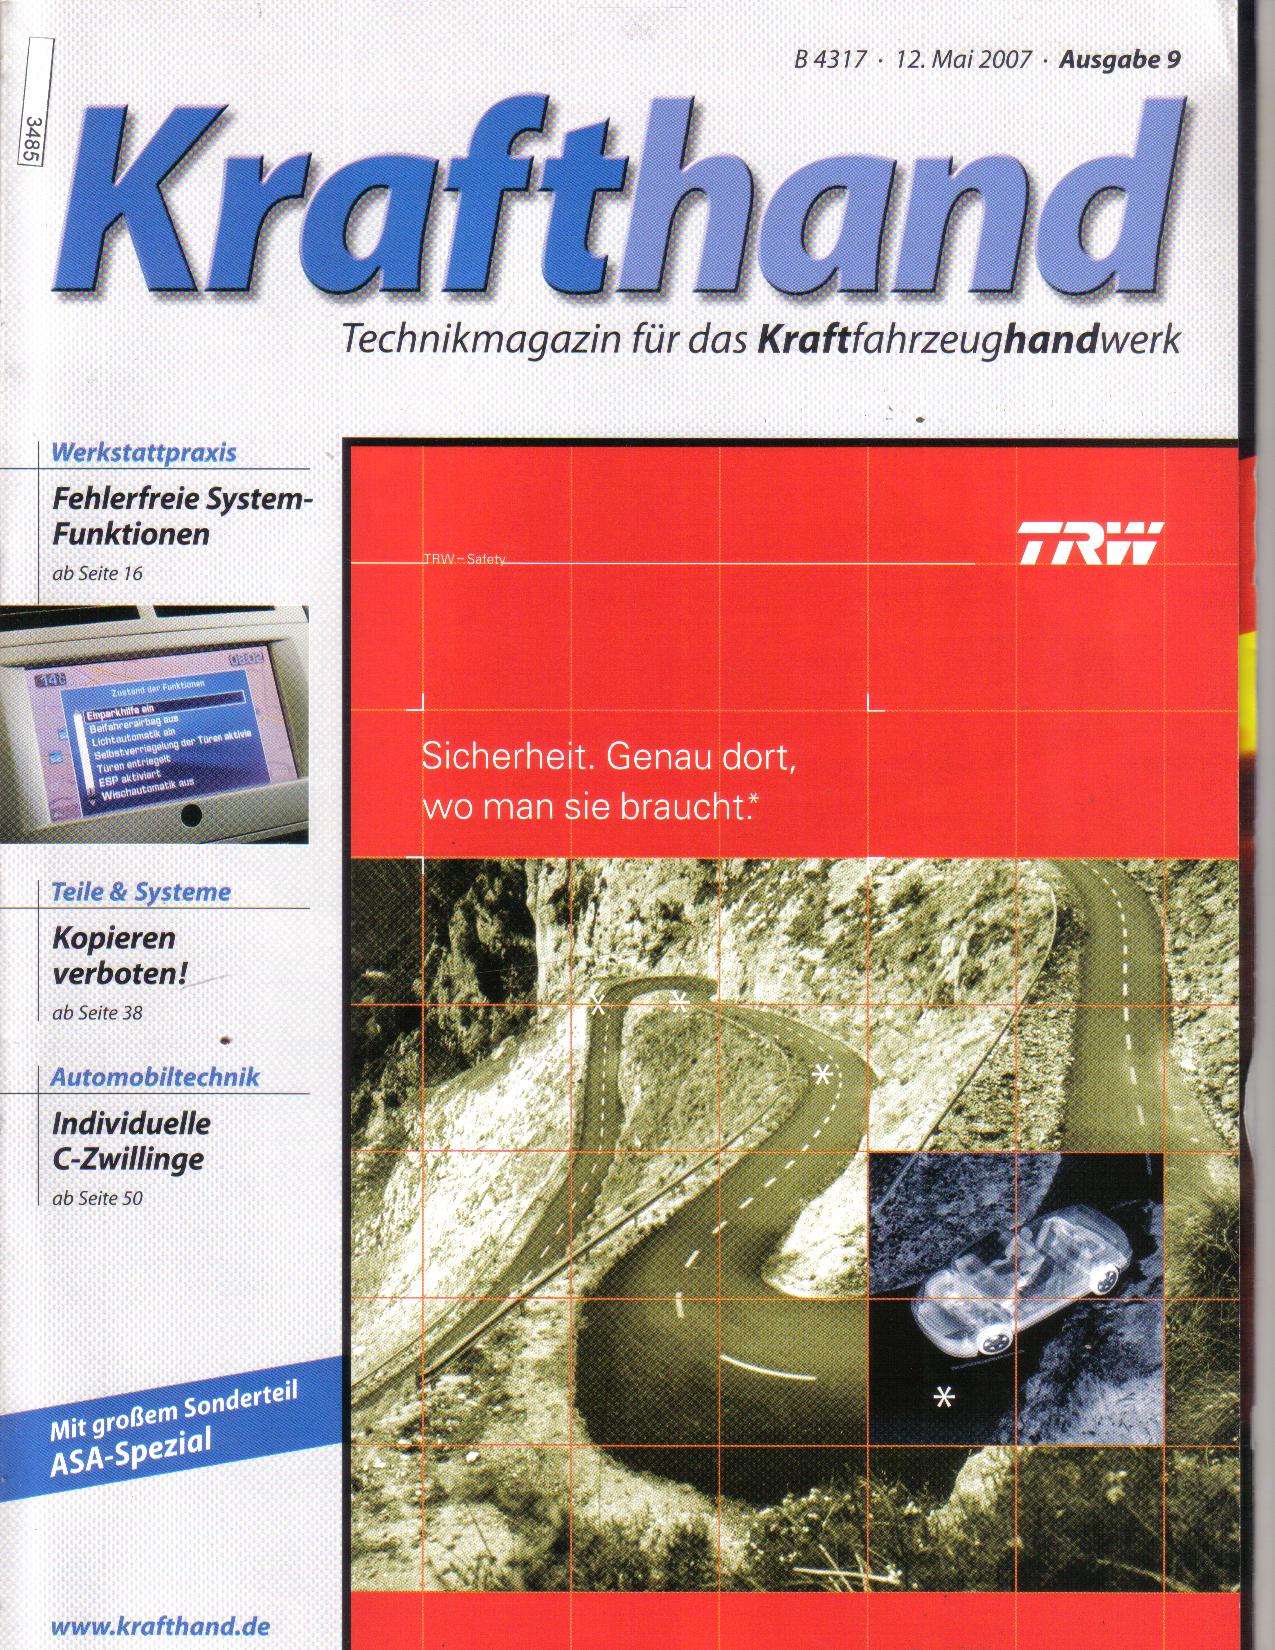 Krafthand   Technikmagazin fuer das Kraftfahrzeughandwerk   12. Mai 2007